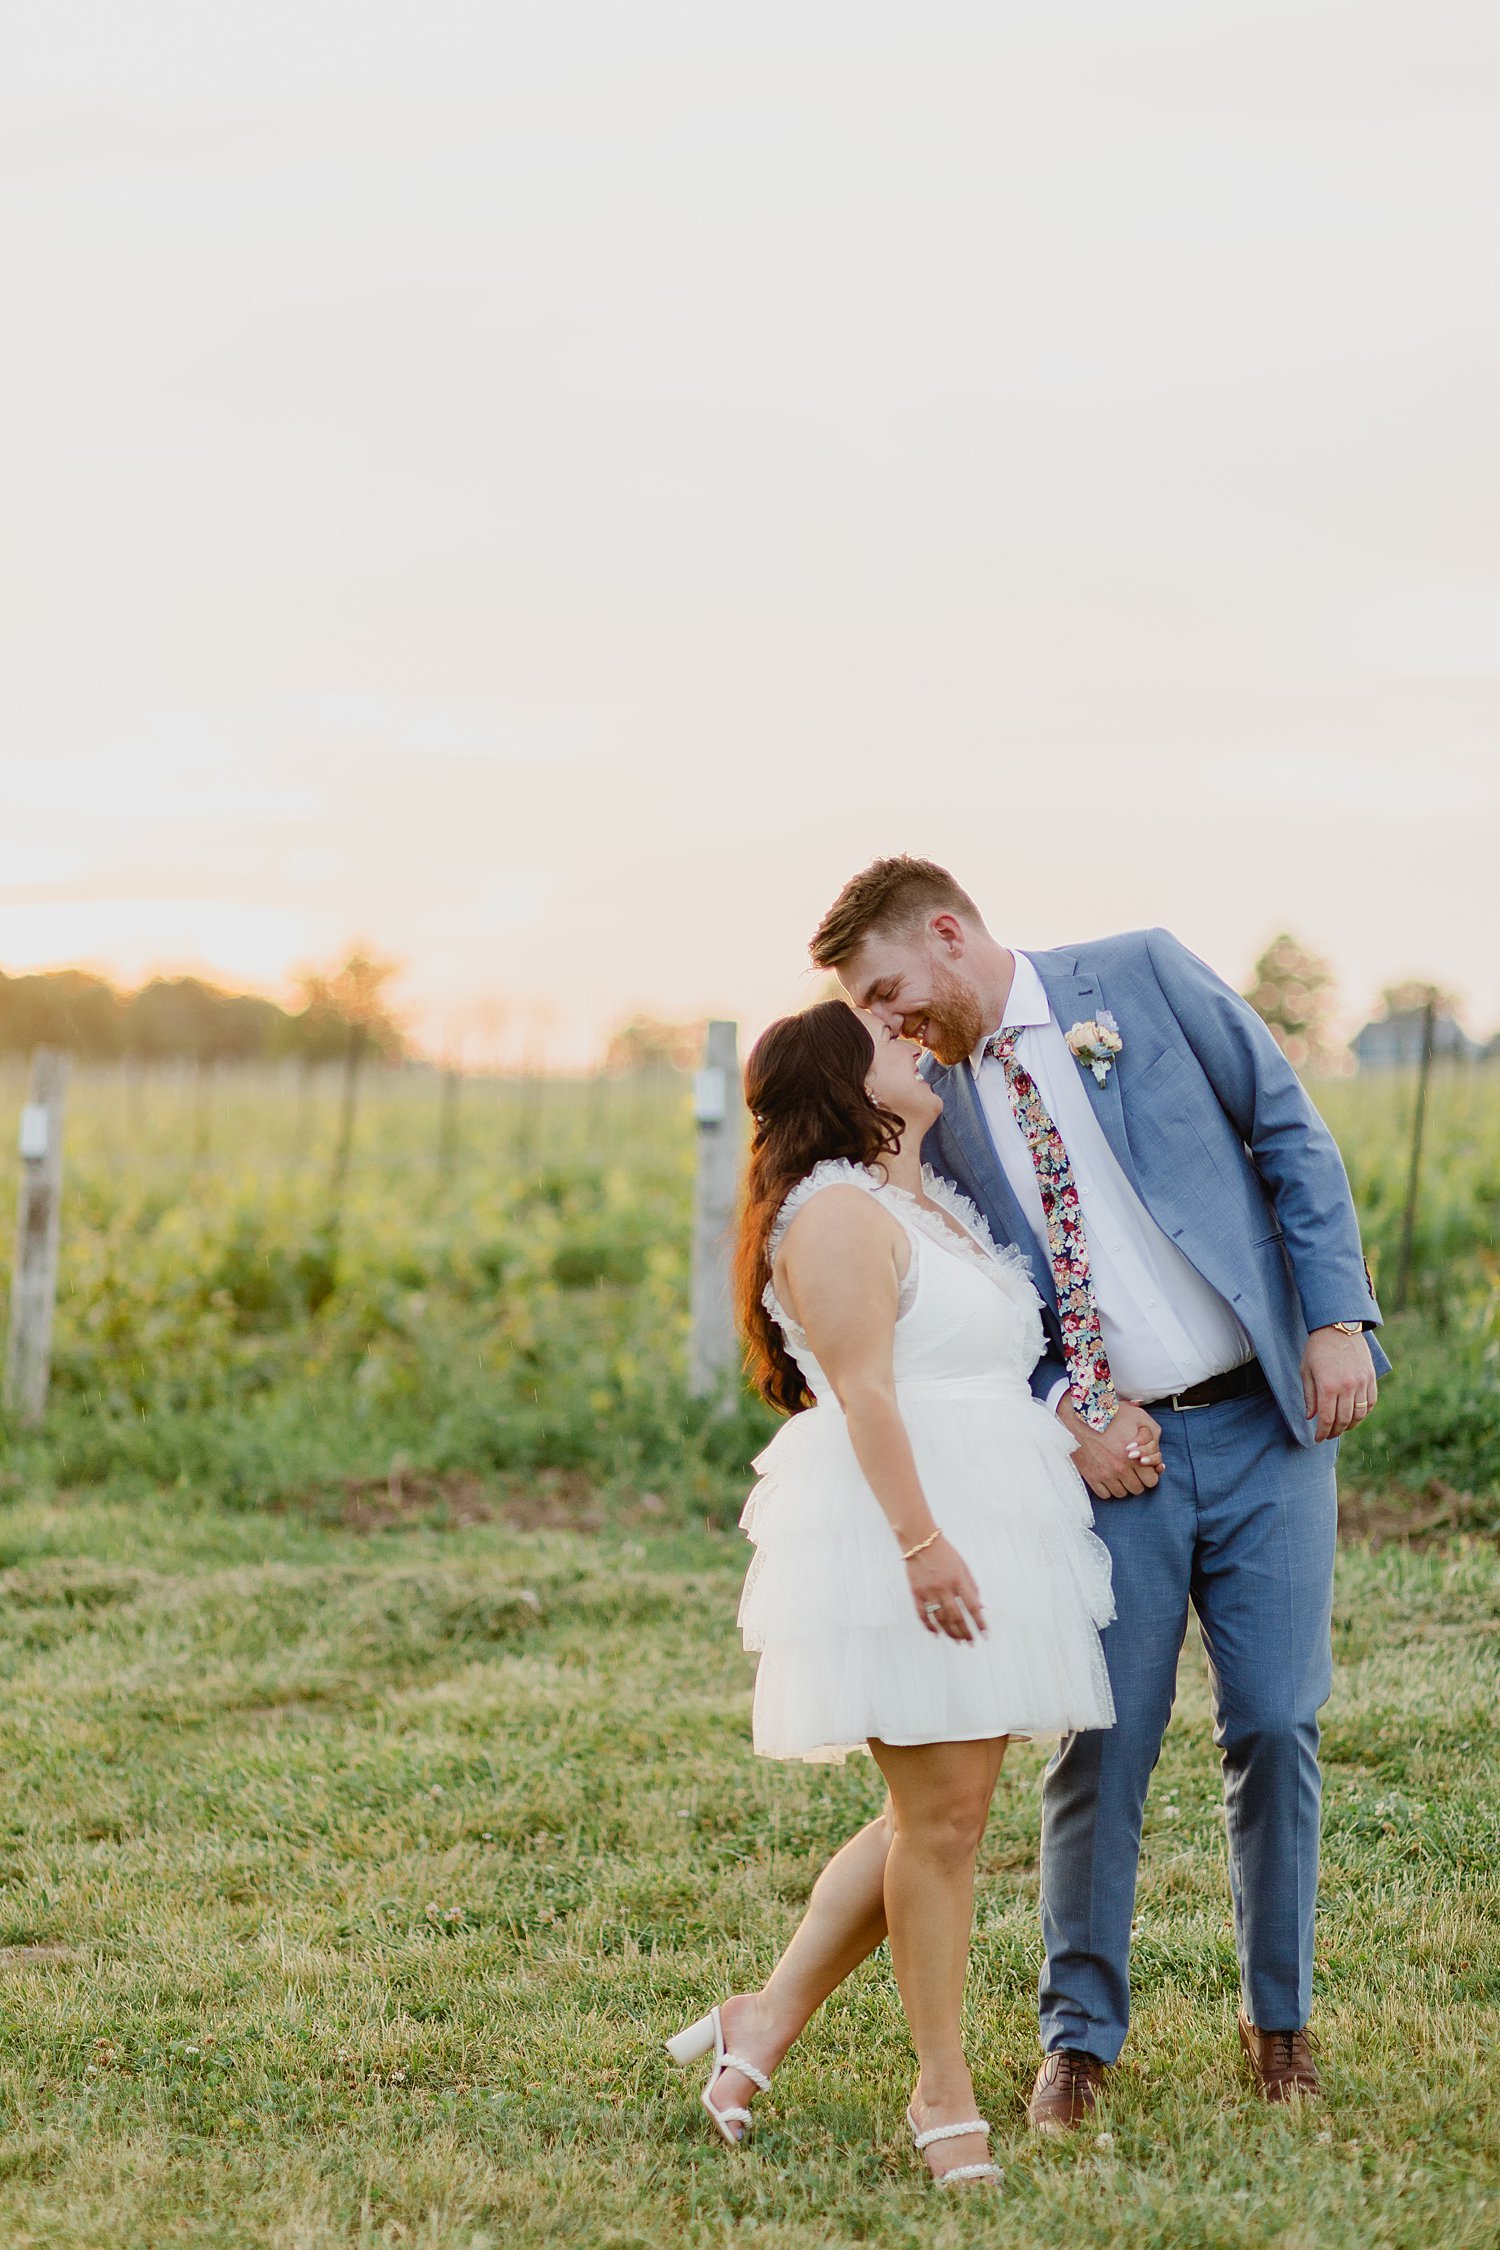 Casa Dea Winery Wedding in Prince Edward County | Prince Edward County Wedding Photographer | Holly McMurter Photographs_0131.jpg